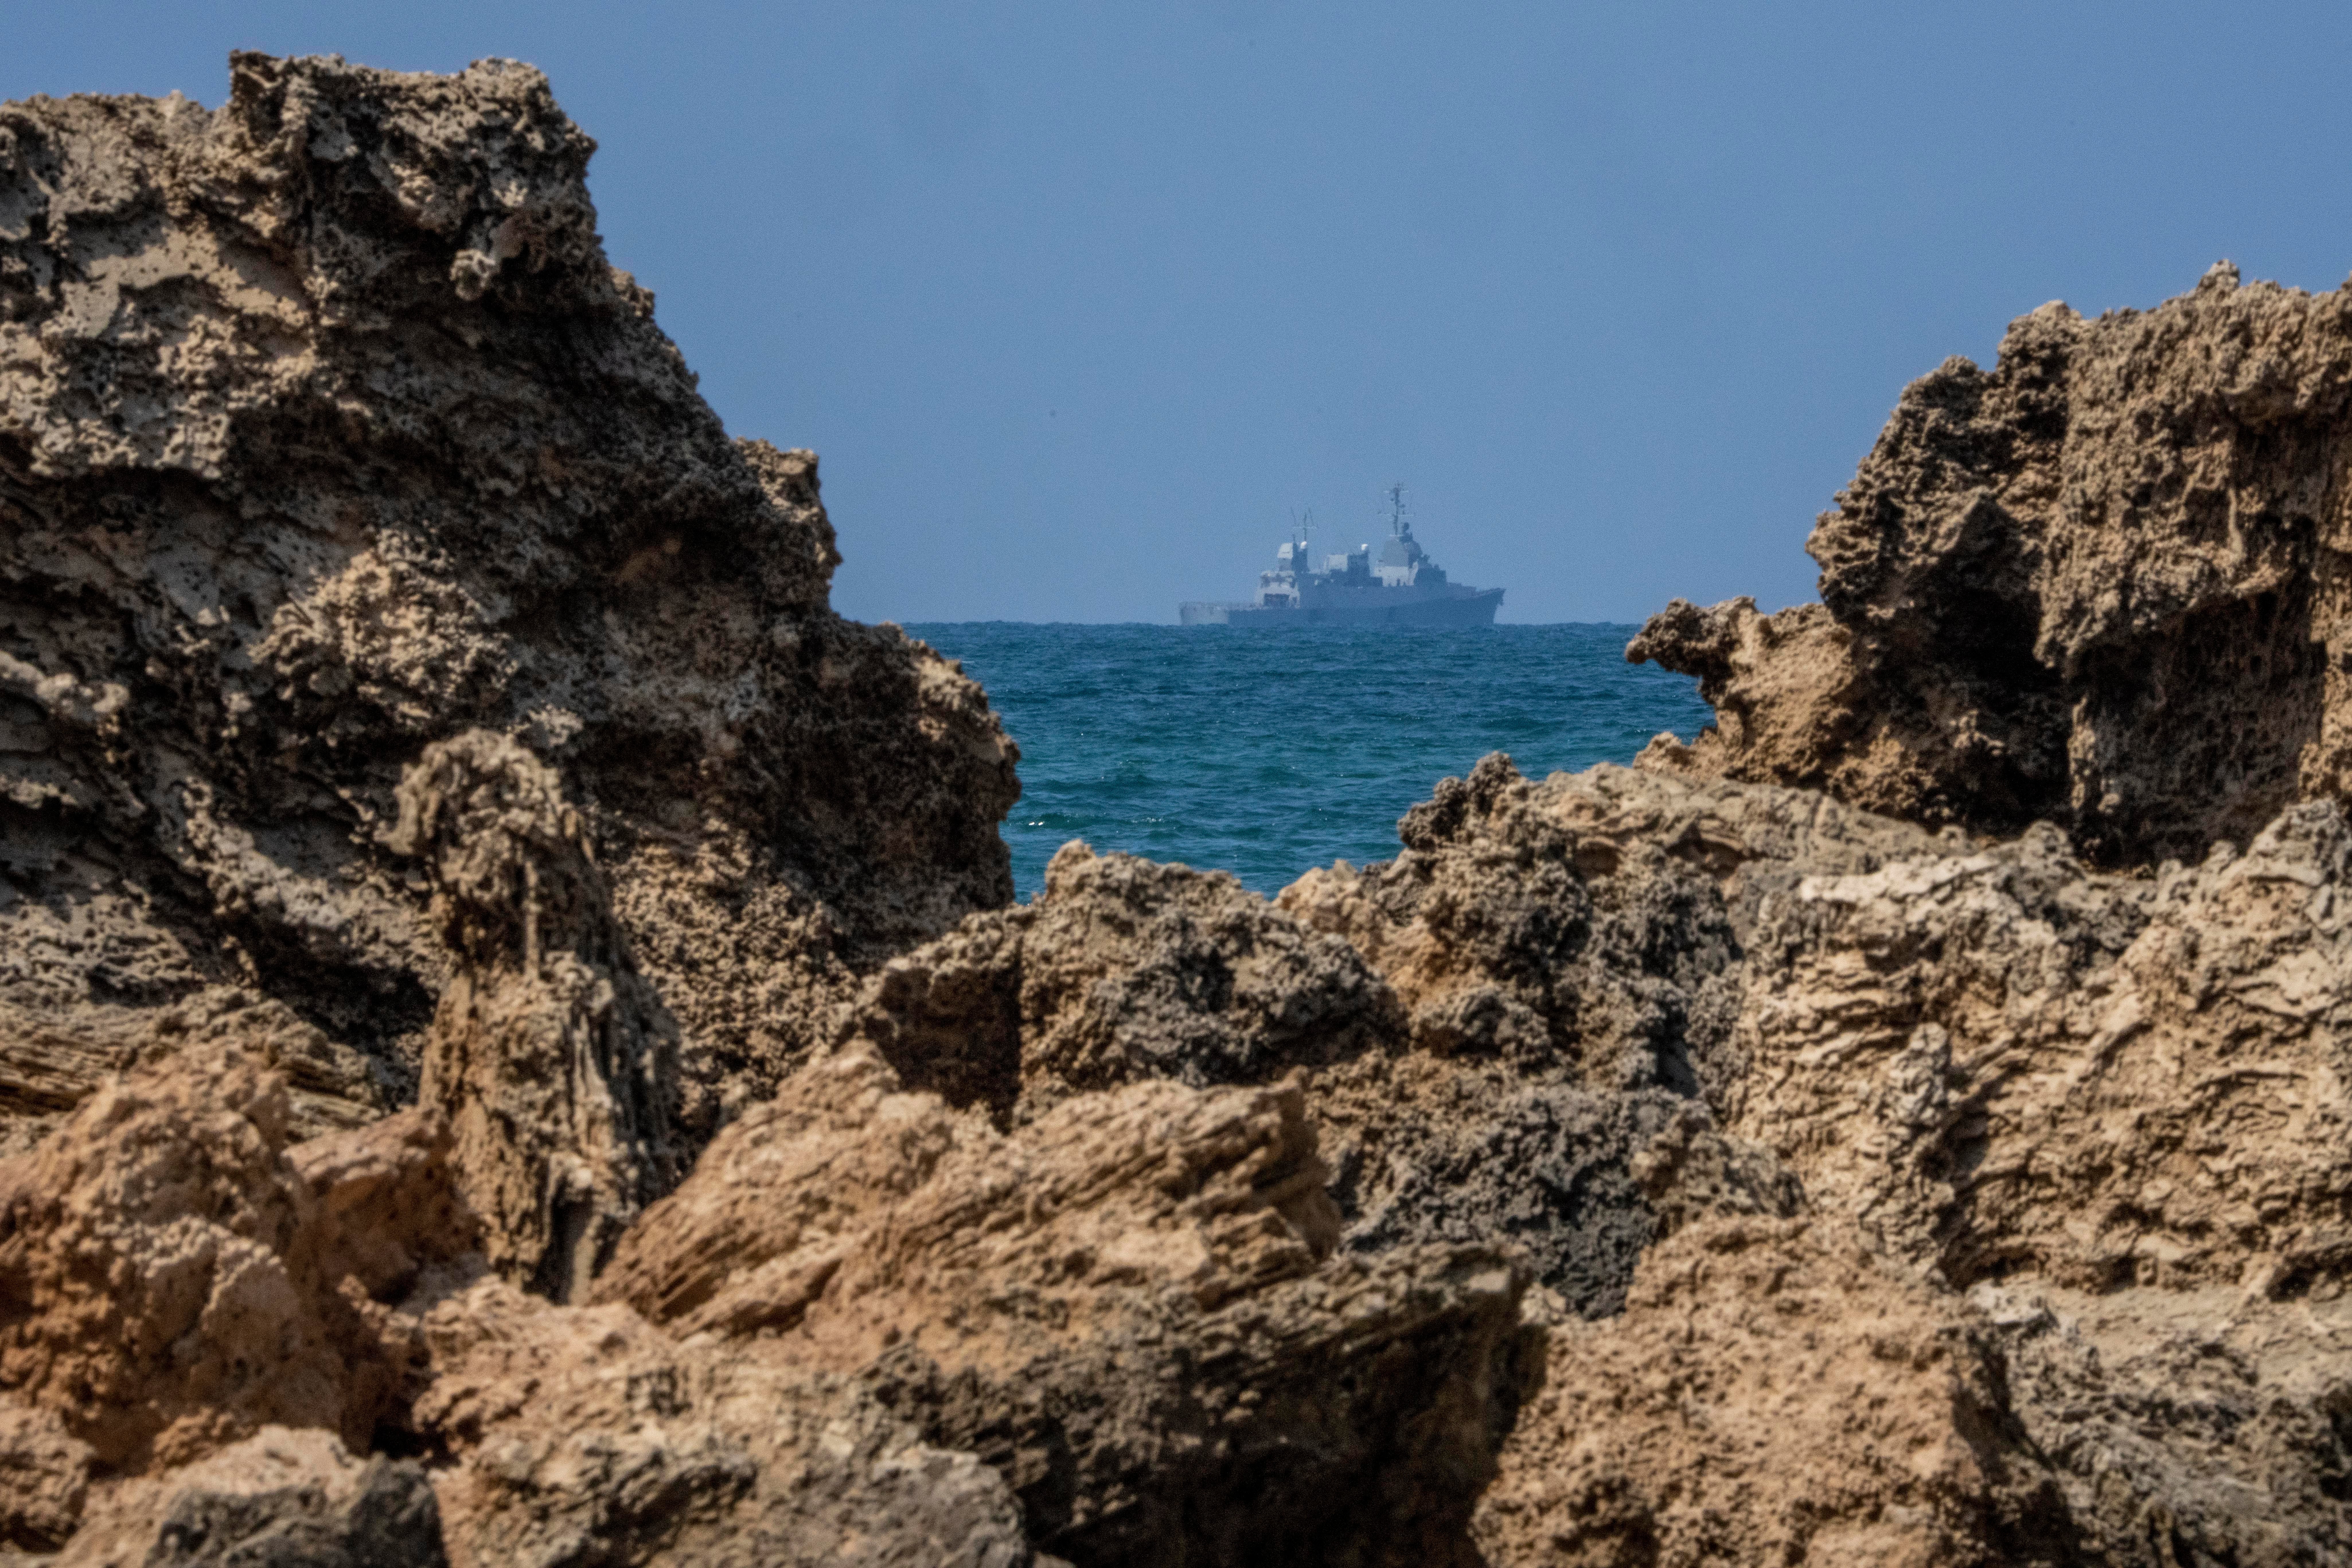 An Israeli military naval ship patrols the Mediterranean Sea off the coast of Hadera, Israel